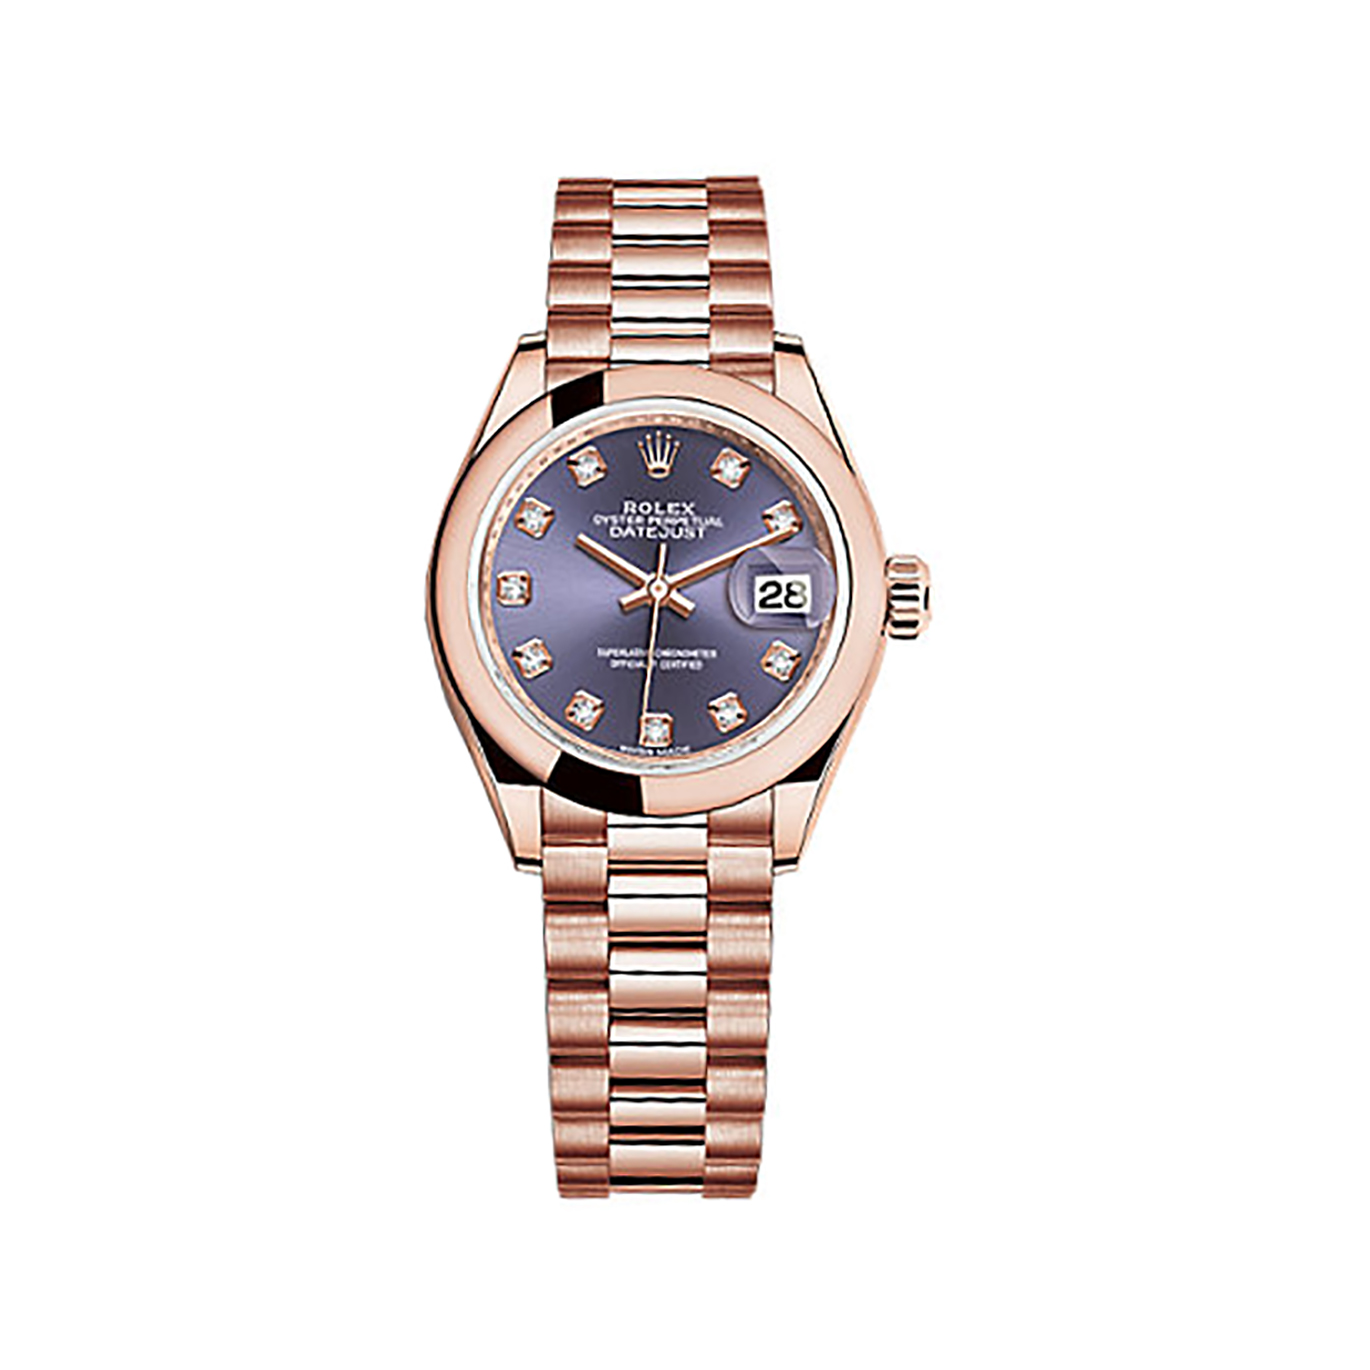 Lady-Datejust 28 279165 Rose Gold Watch (Aubergine Set with Diamonds)